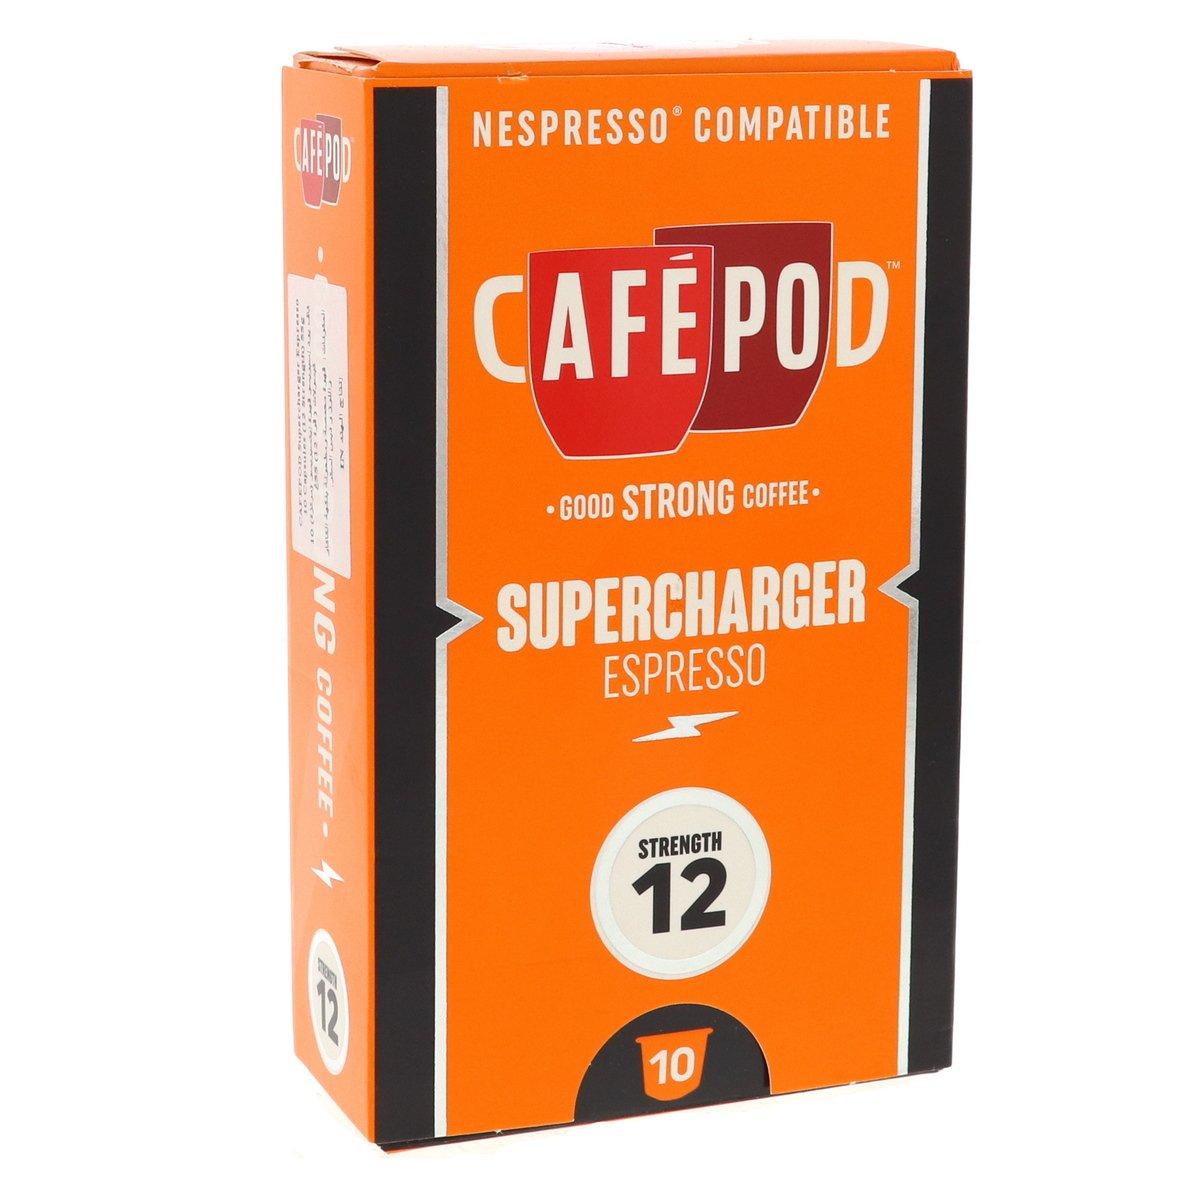 Cafe Pod Nespresso Compatible Supercharger Espresso 55 g